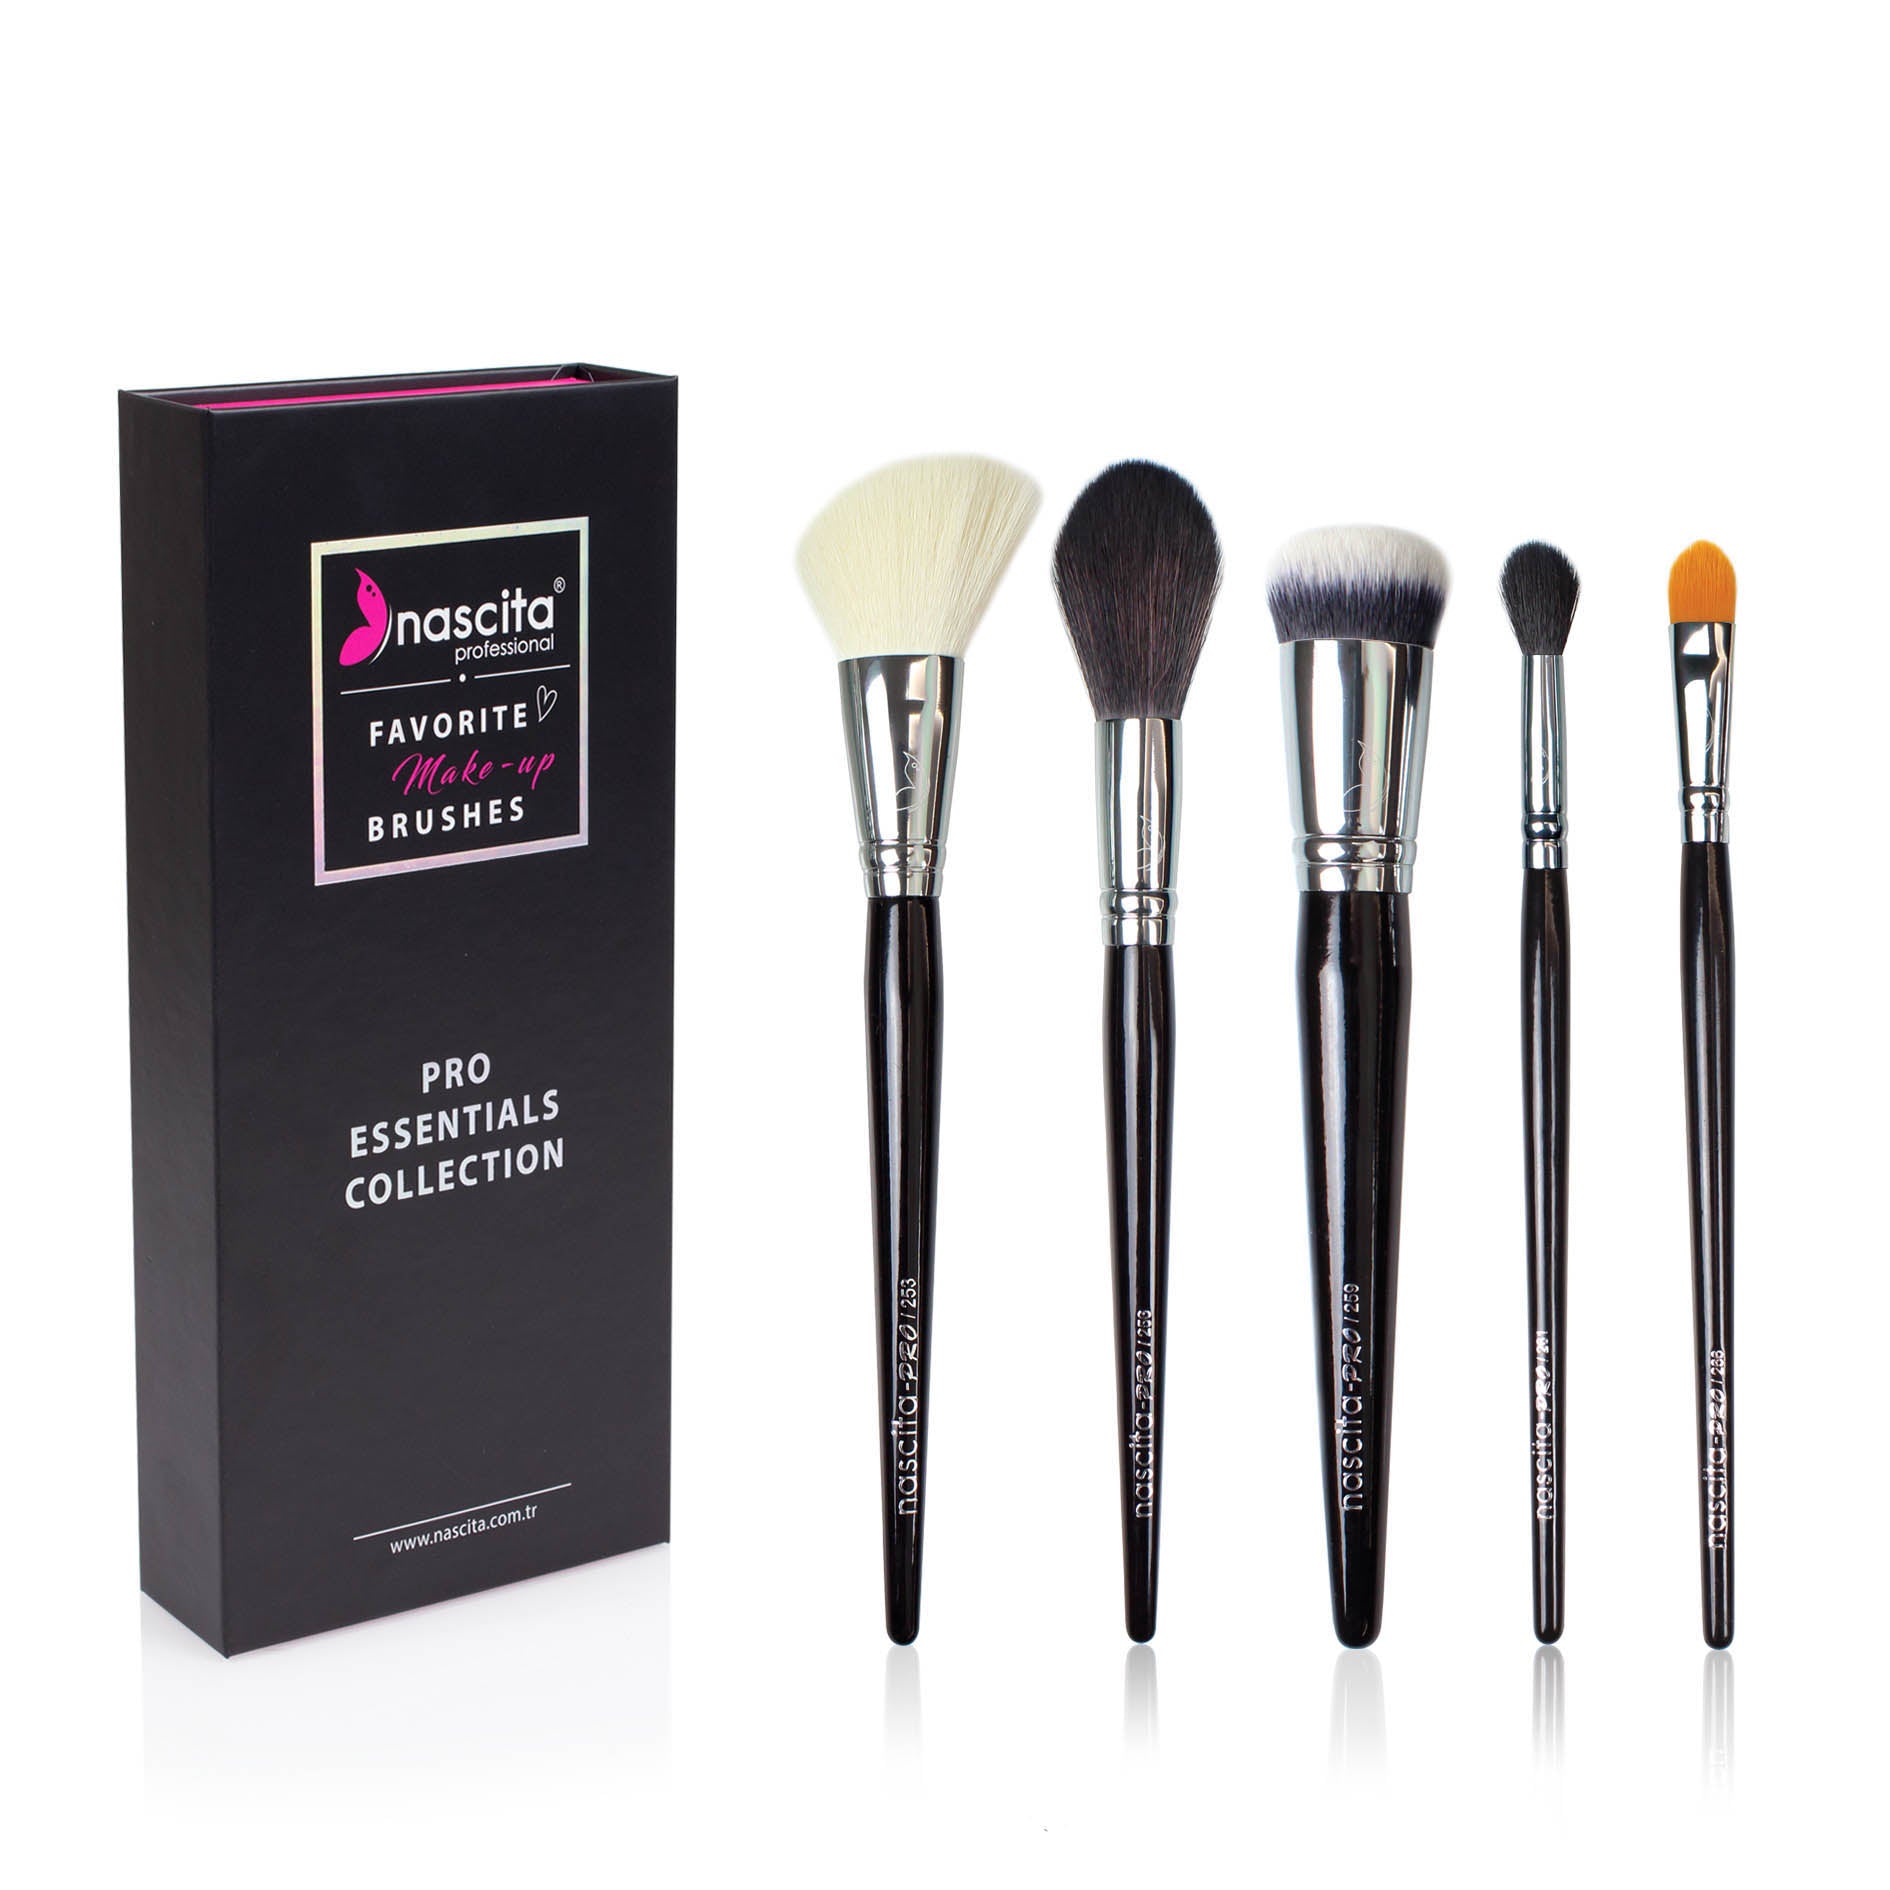 Nascita Pro Best Of Makeup Brush Set